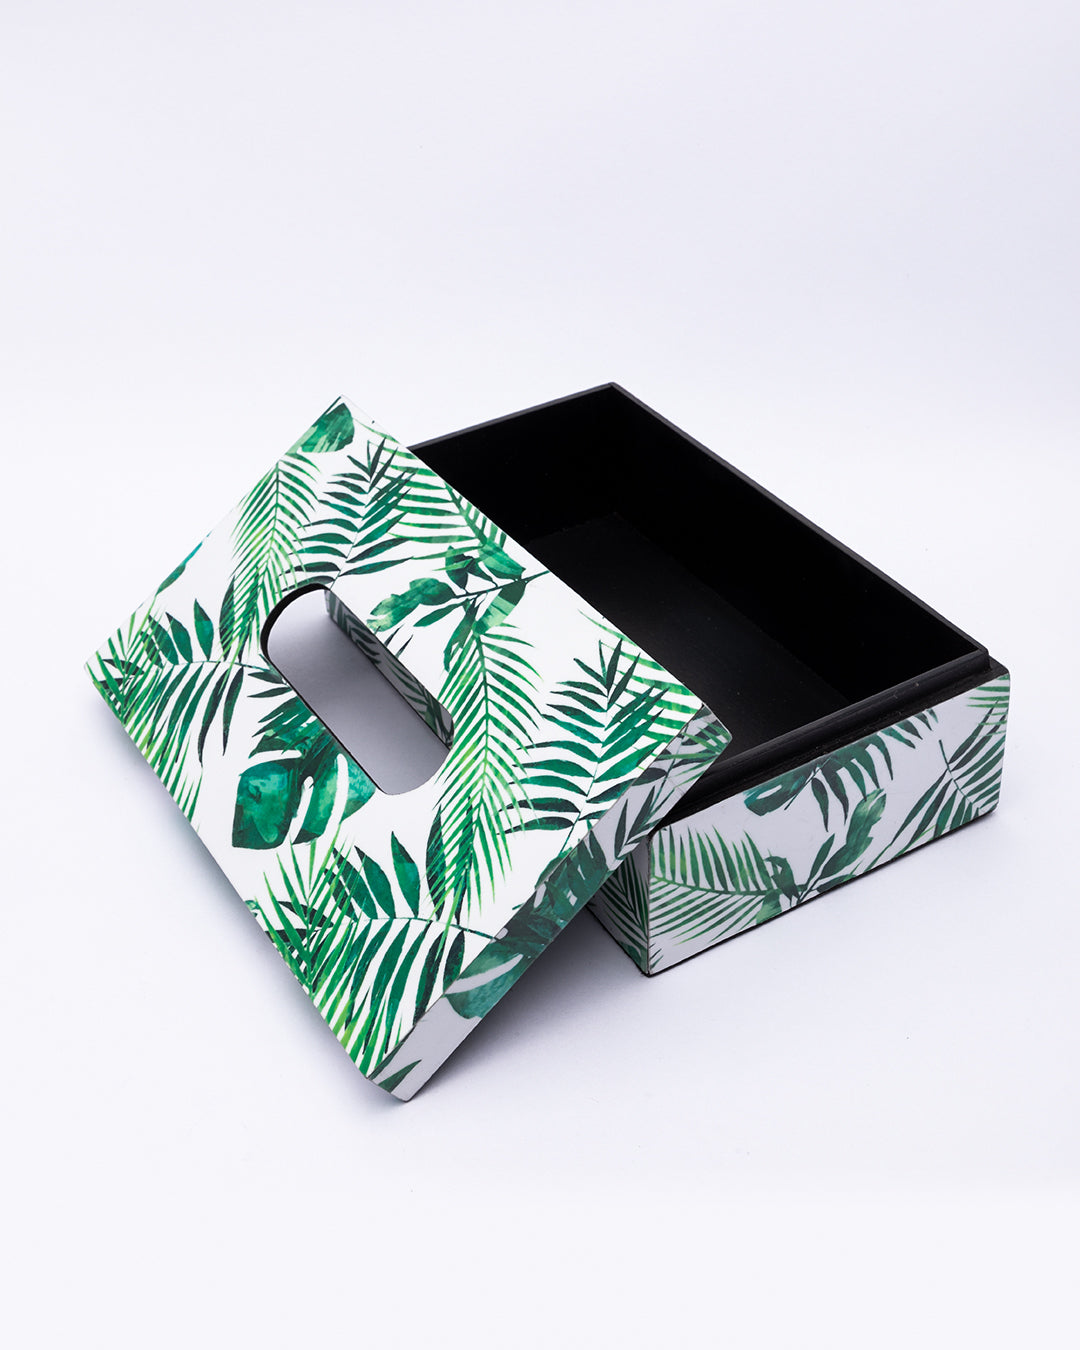 VON CASA Tissue Box, Nature Inspired Design, Facial Tissue Holder with Soft Bottom for Home, Office, & Restaurant, Rectangular, Green Colour, MDF